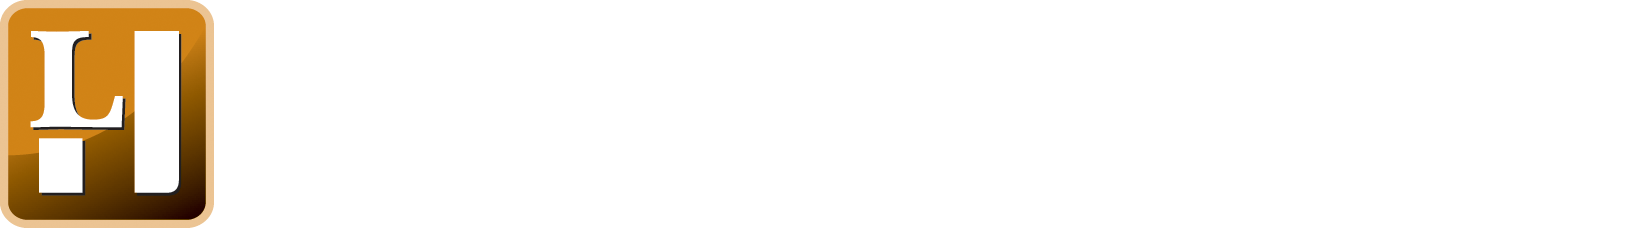 LancasterHistory logo.